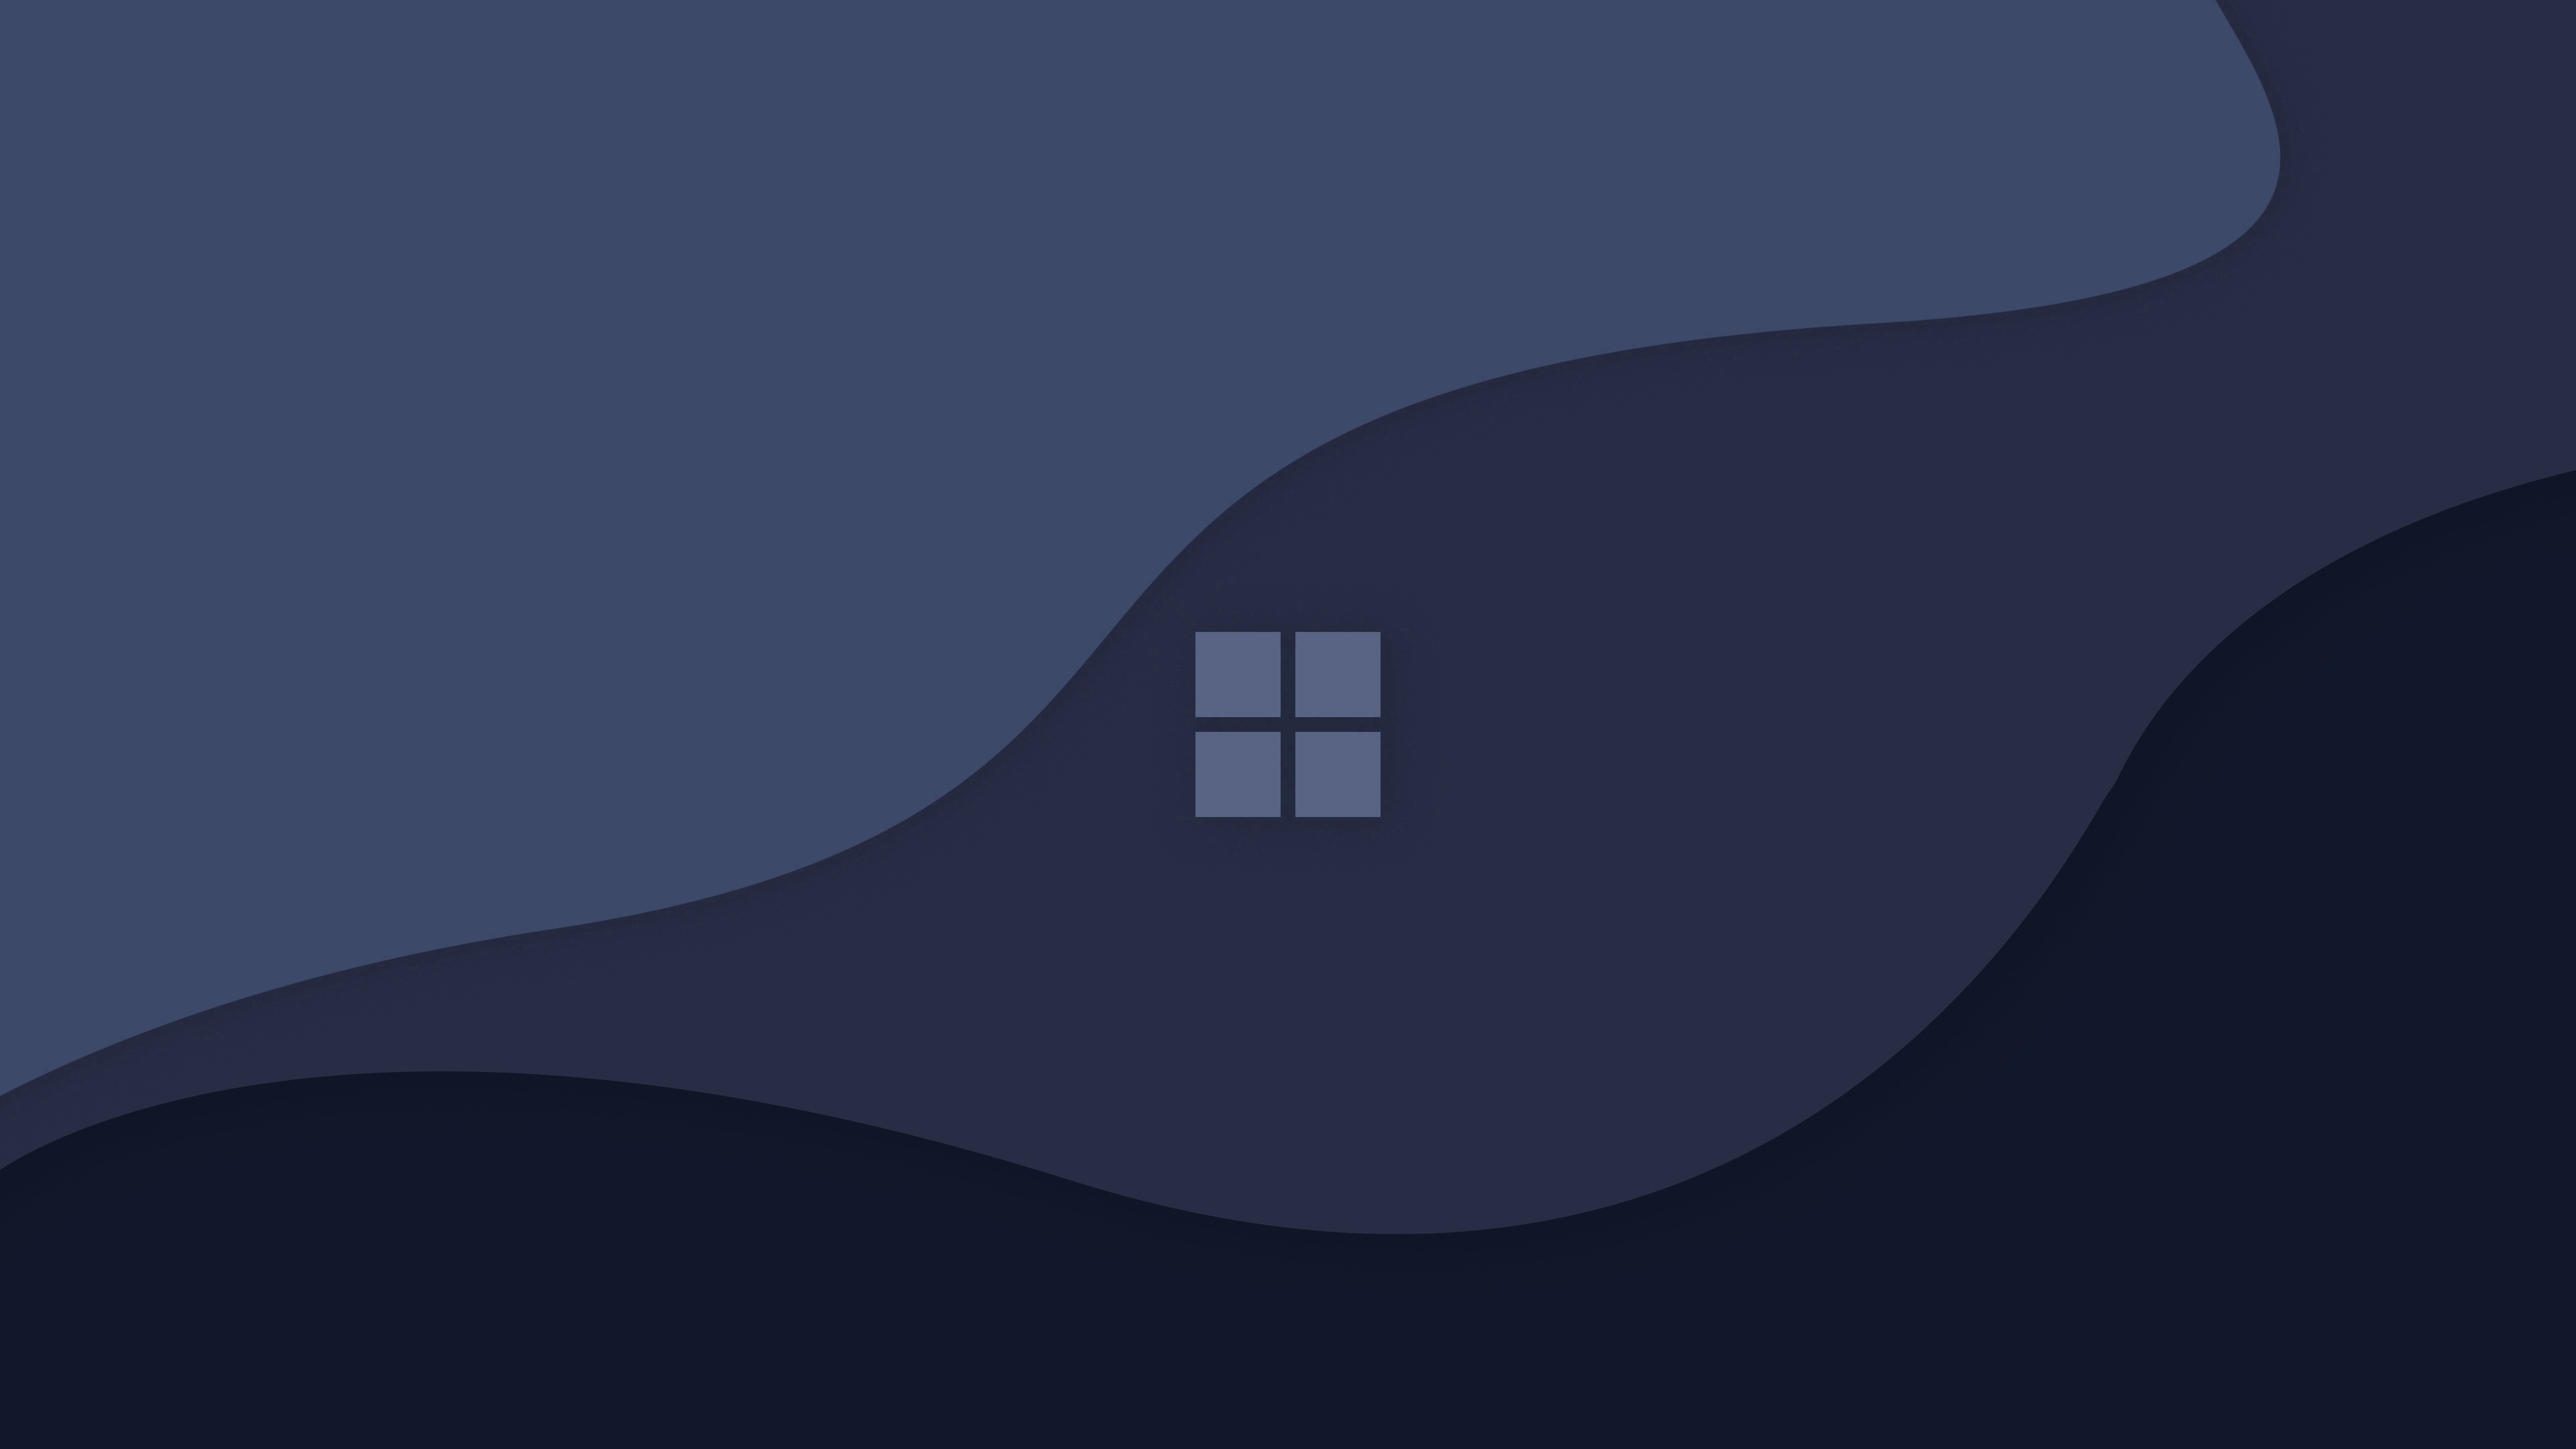 General 3840x2160 Windows 11 windows logo minimalism digital art blue simple background logo AI art